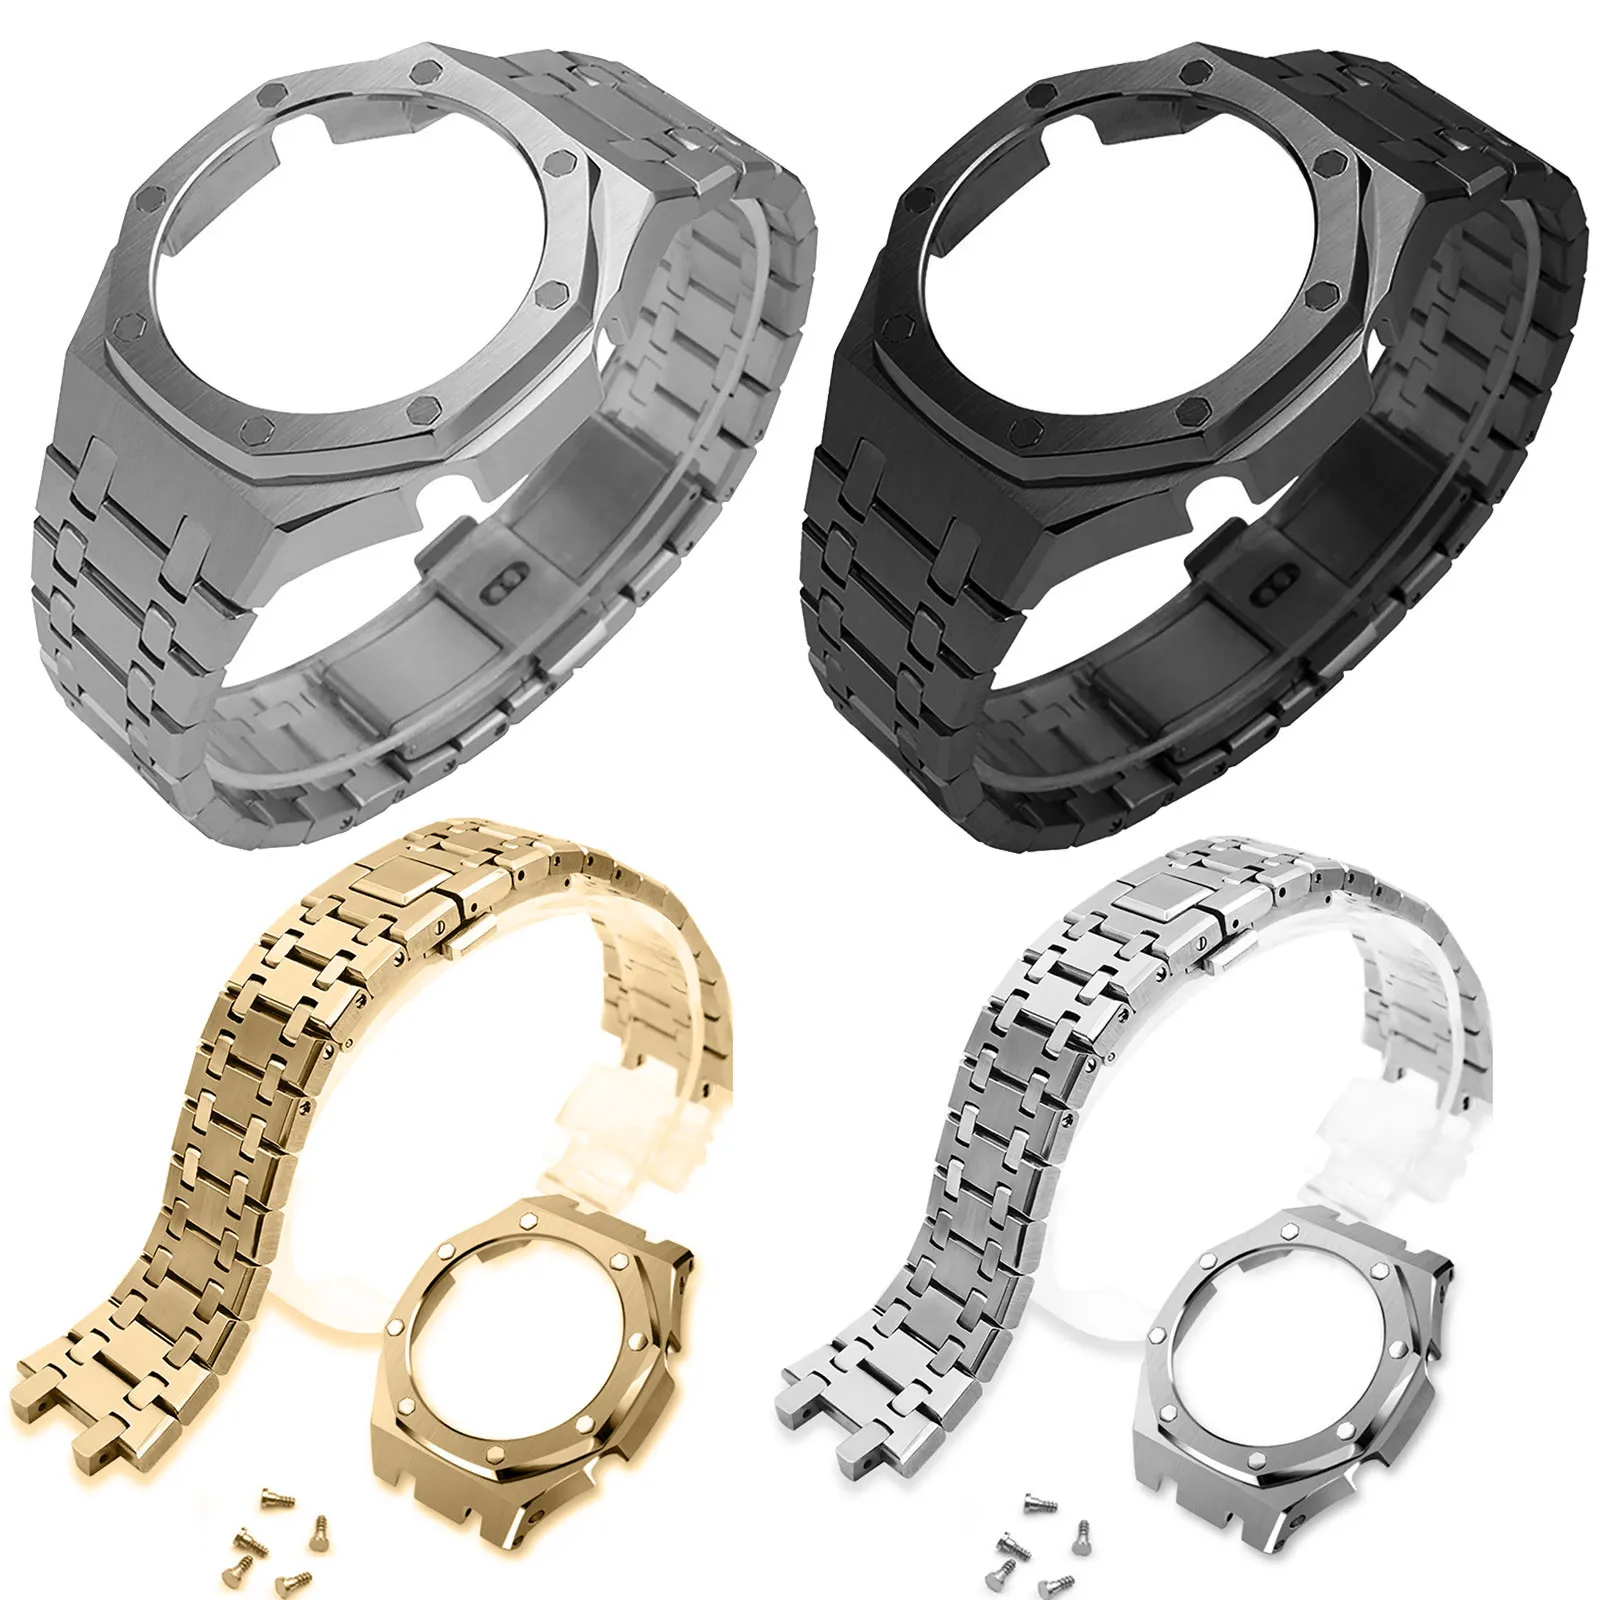 

Stainless Steel Luxury Strap For CASIO G-SHOCK GA-2100 GA-2110 Bracelet With Case Golden Bands Full Protection Correa de reloj